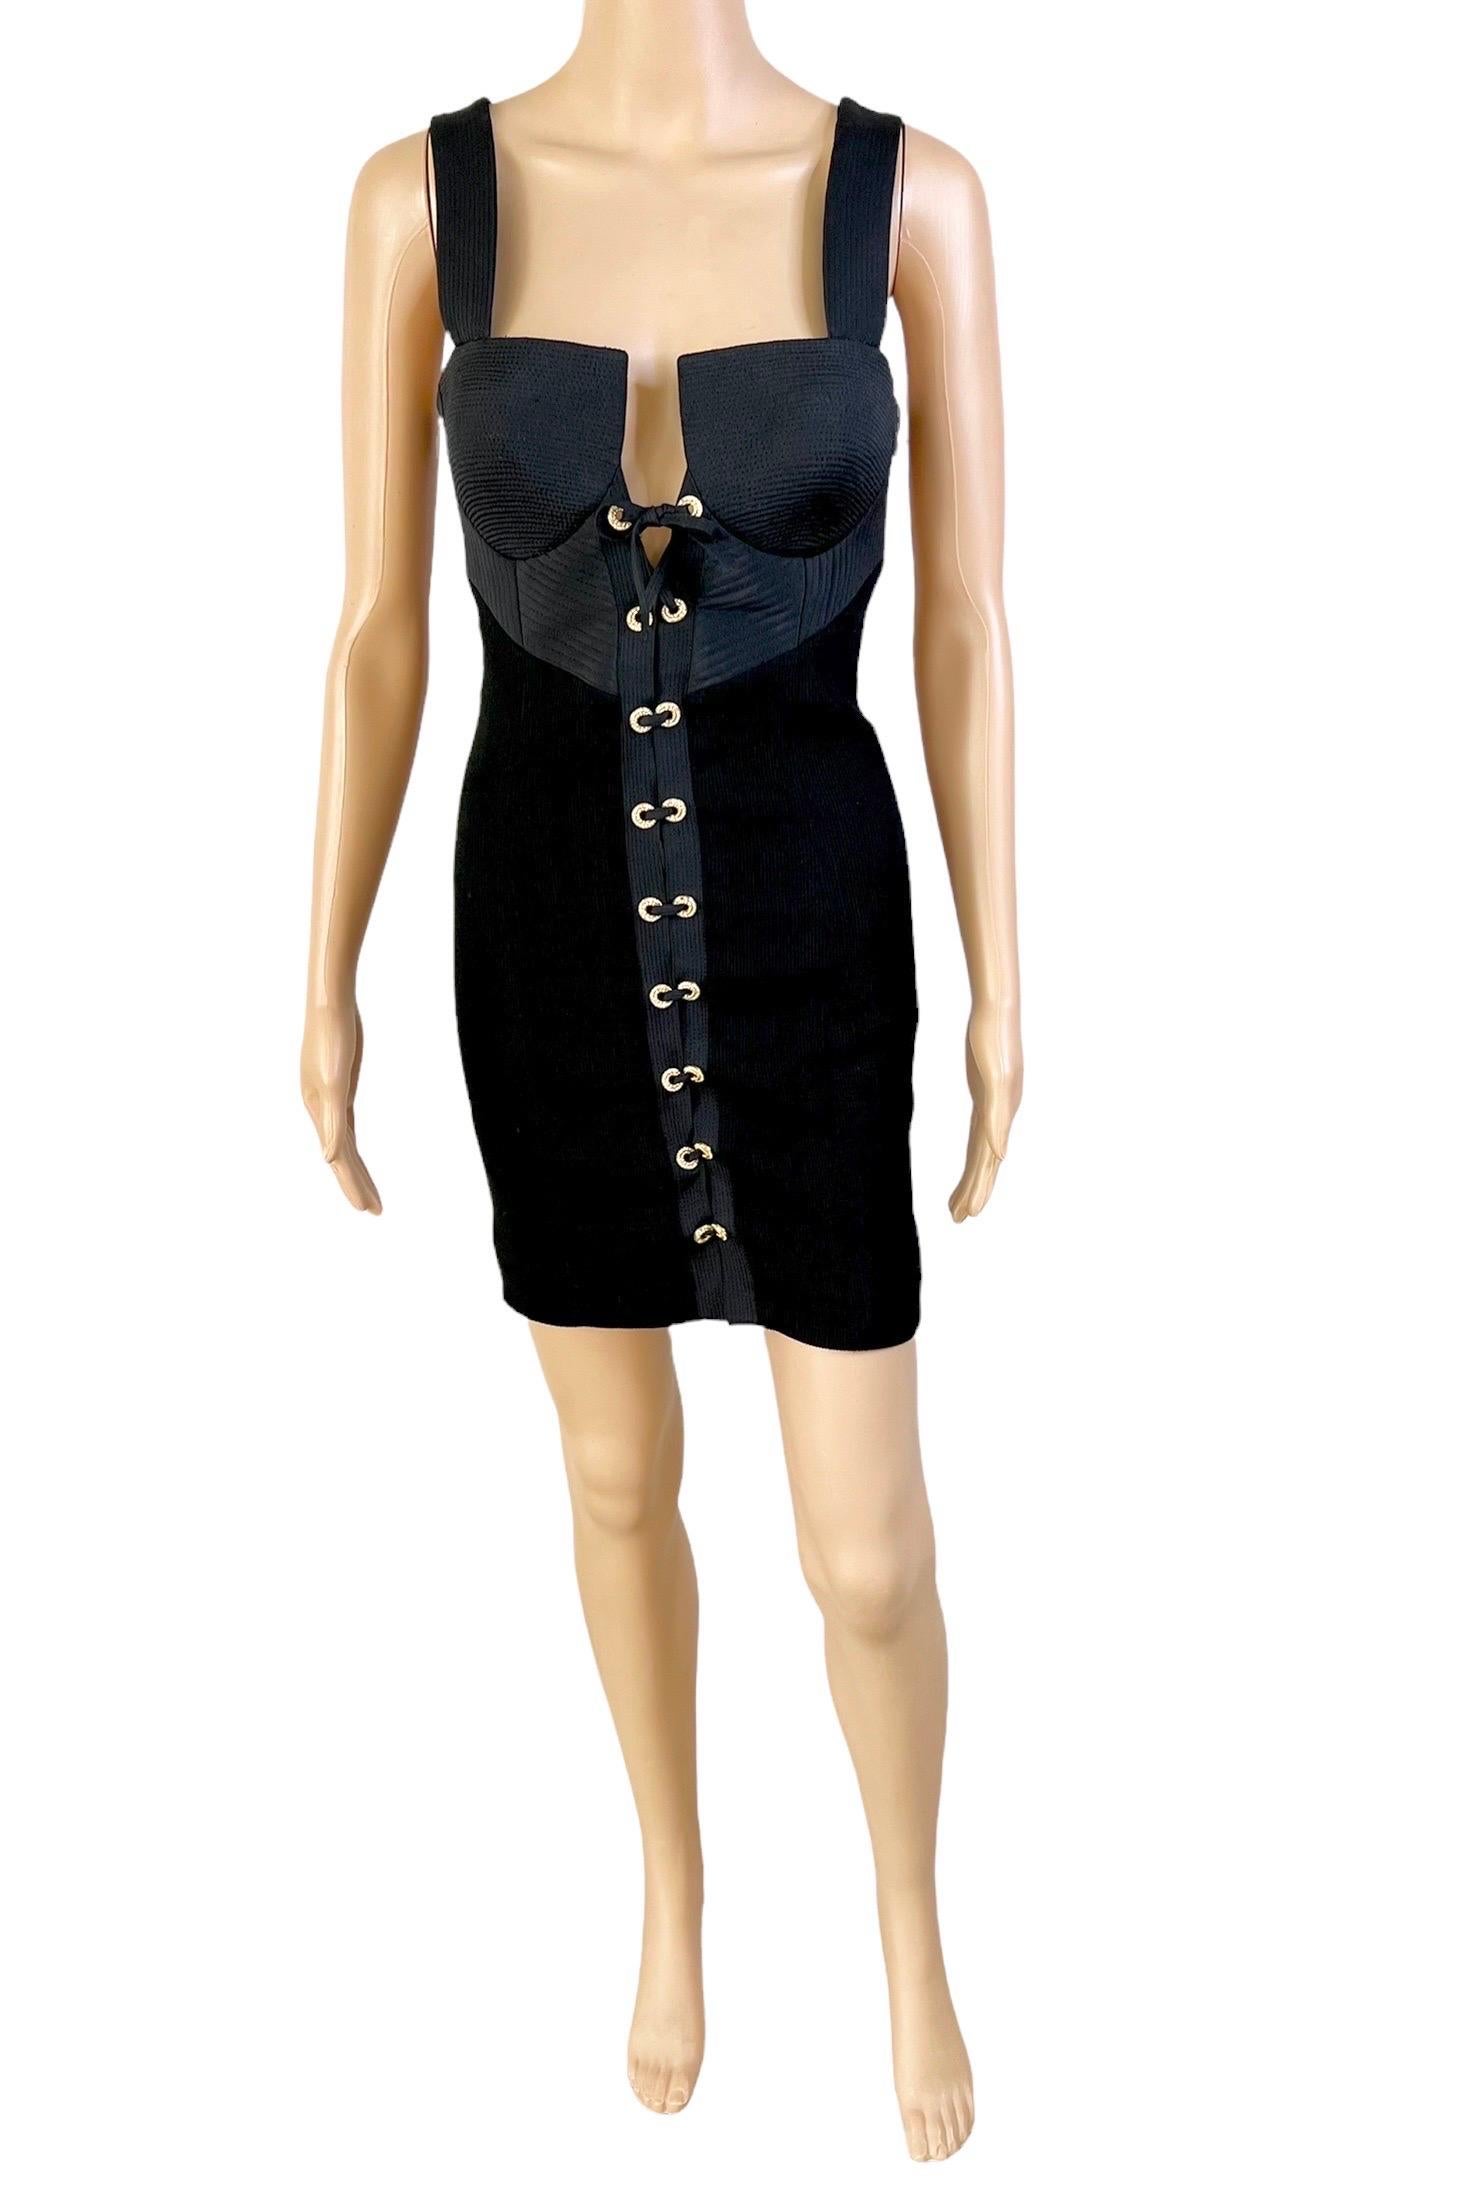 Gianni Versace S/S 1992 Couture Bustier Corset Lace Up Black Mini Dress For Sale 1